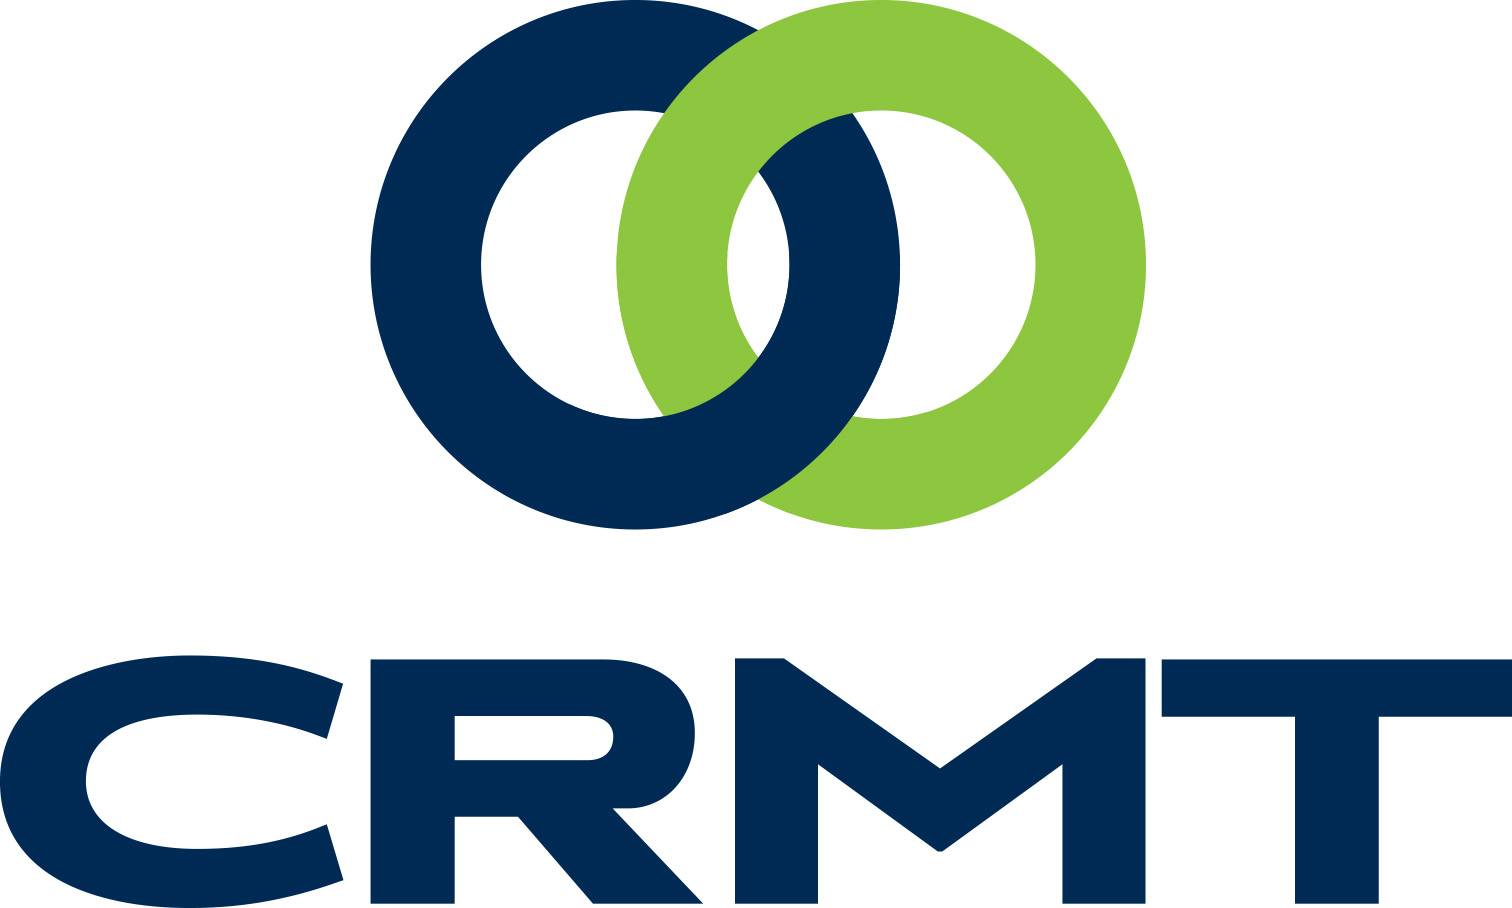 CRMT logo primarni color3